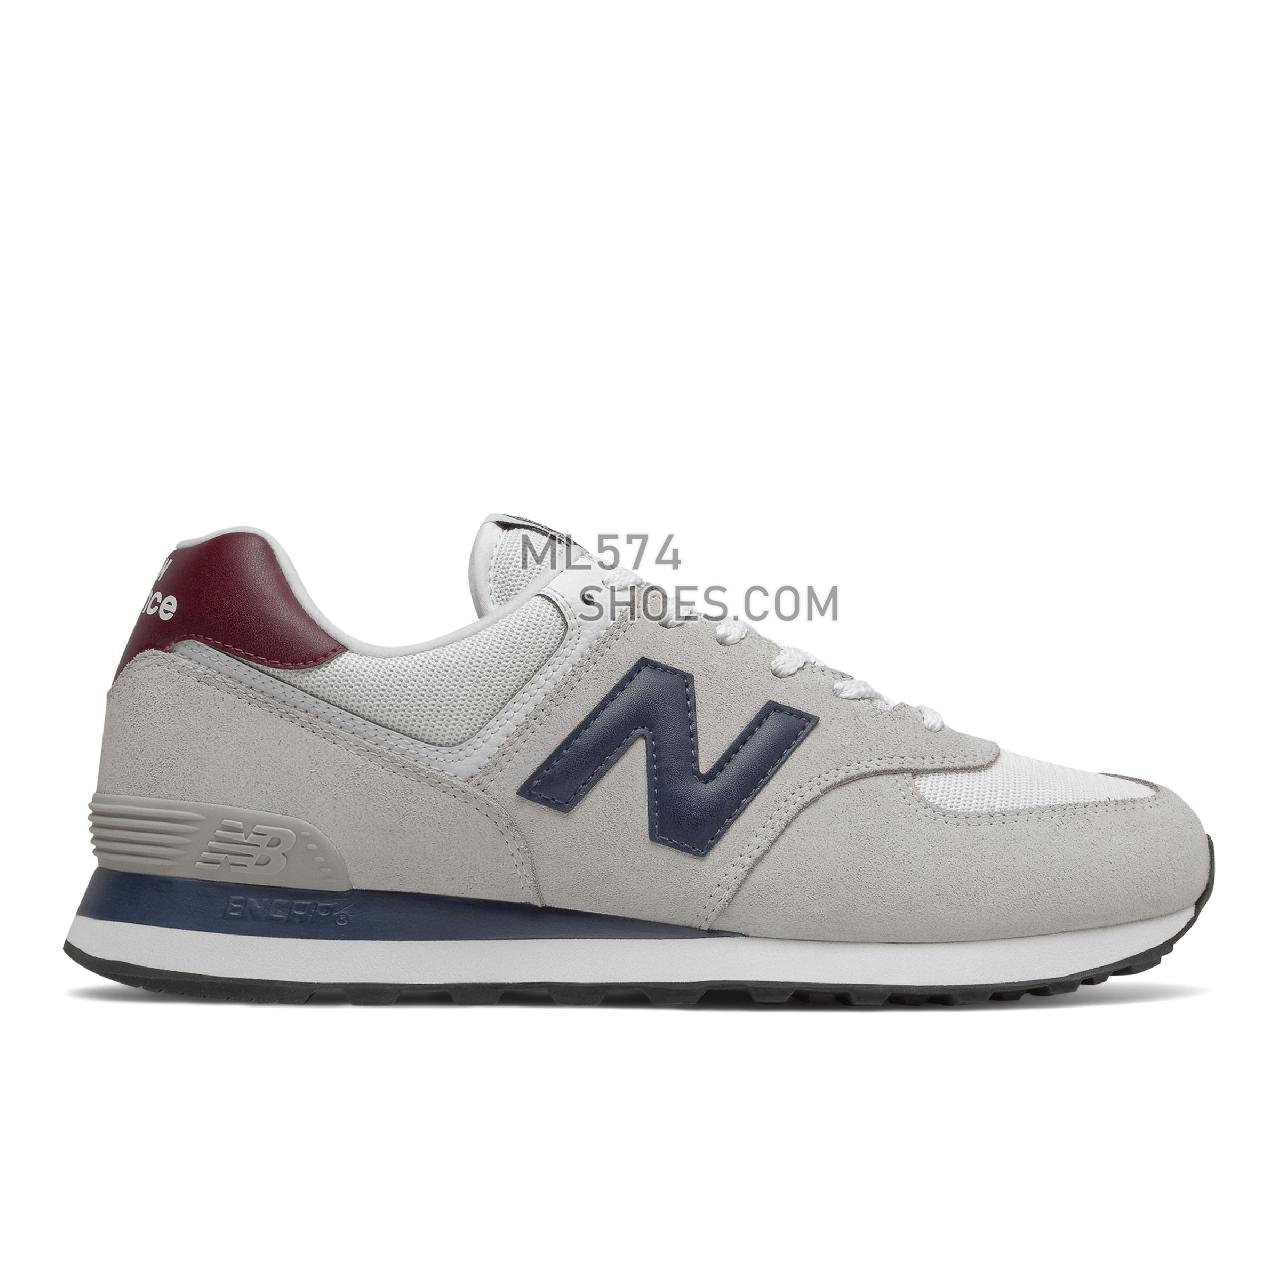 New Balance 574v2 - Men's Classic Sneakers - White with Natural Indigo - ML574HX2